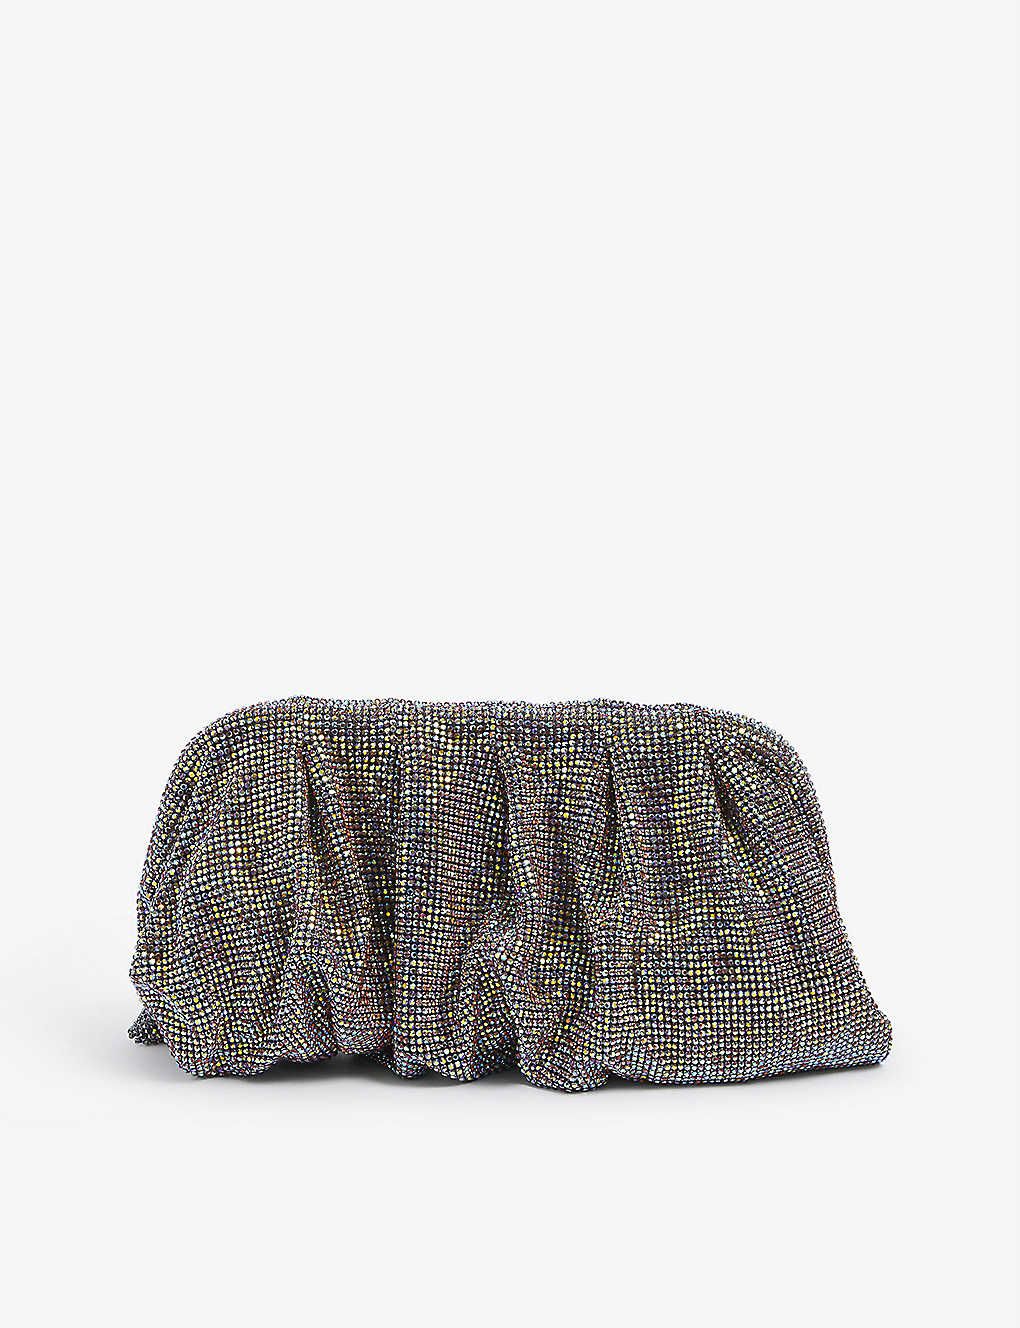 Venus La Grande rhinestone-embellished mesh clutch bag | Selfridges